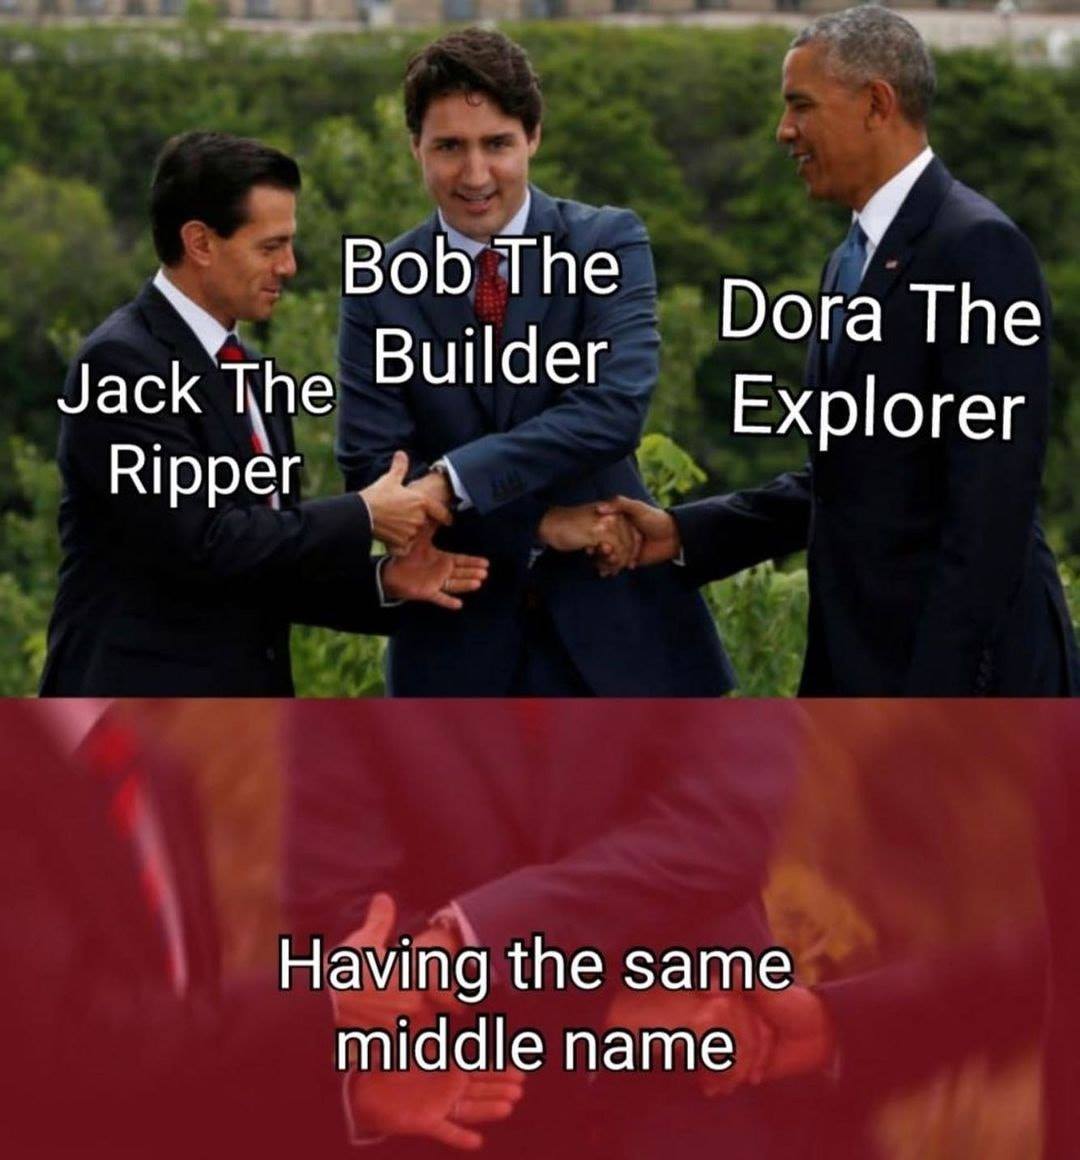 photo caption - Bob The Jack The Builder Ripper Dora The Explorer Having the same middle name